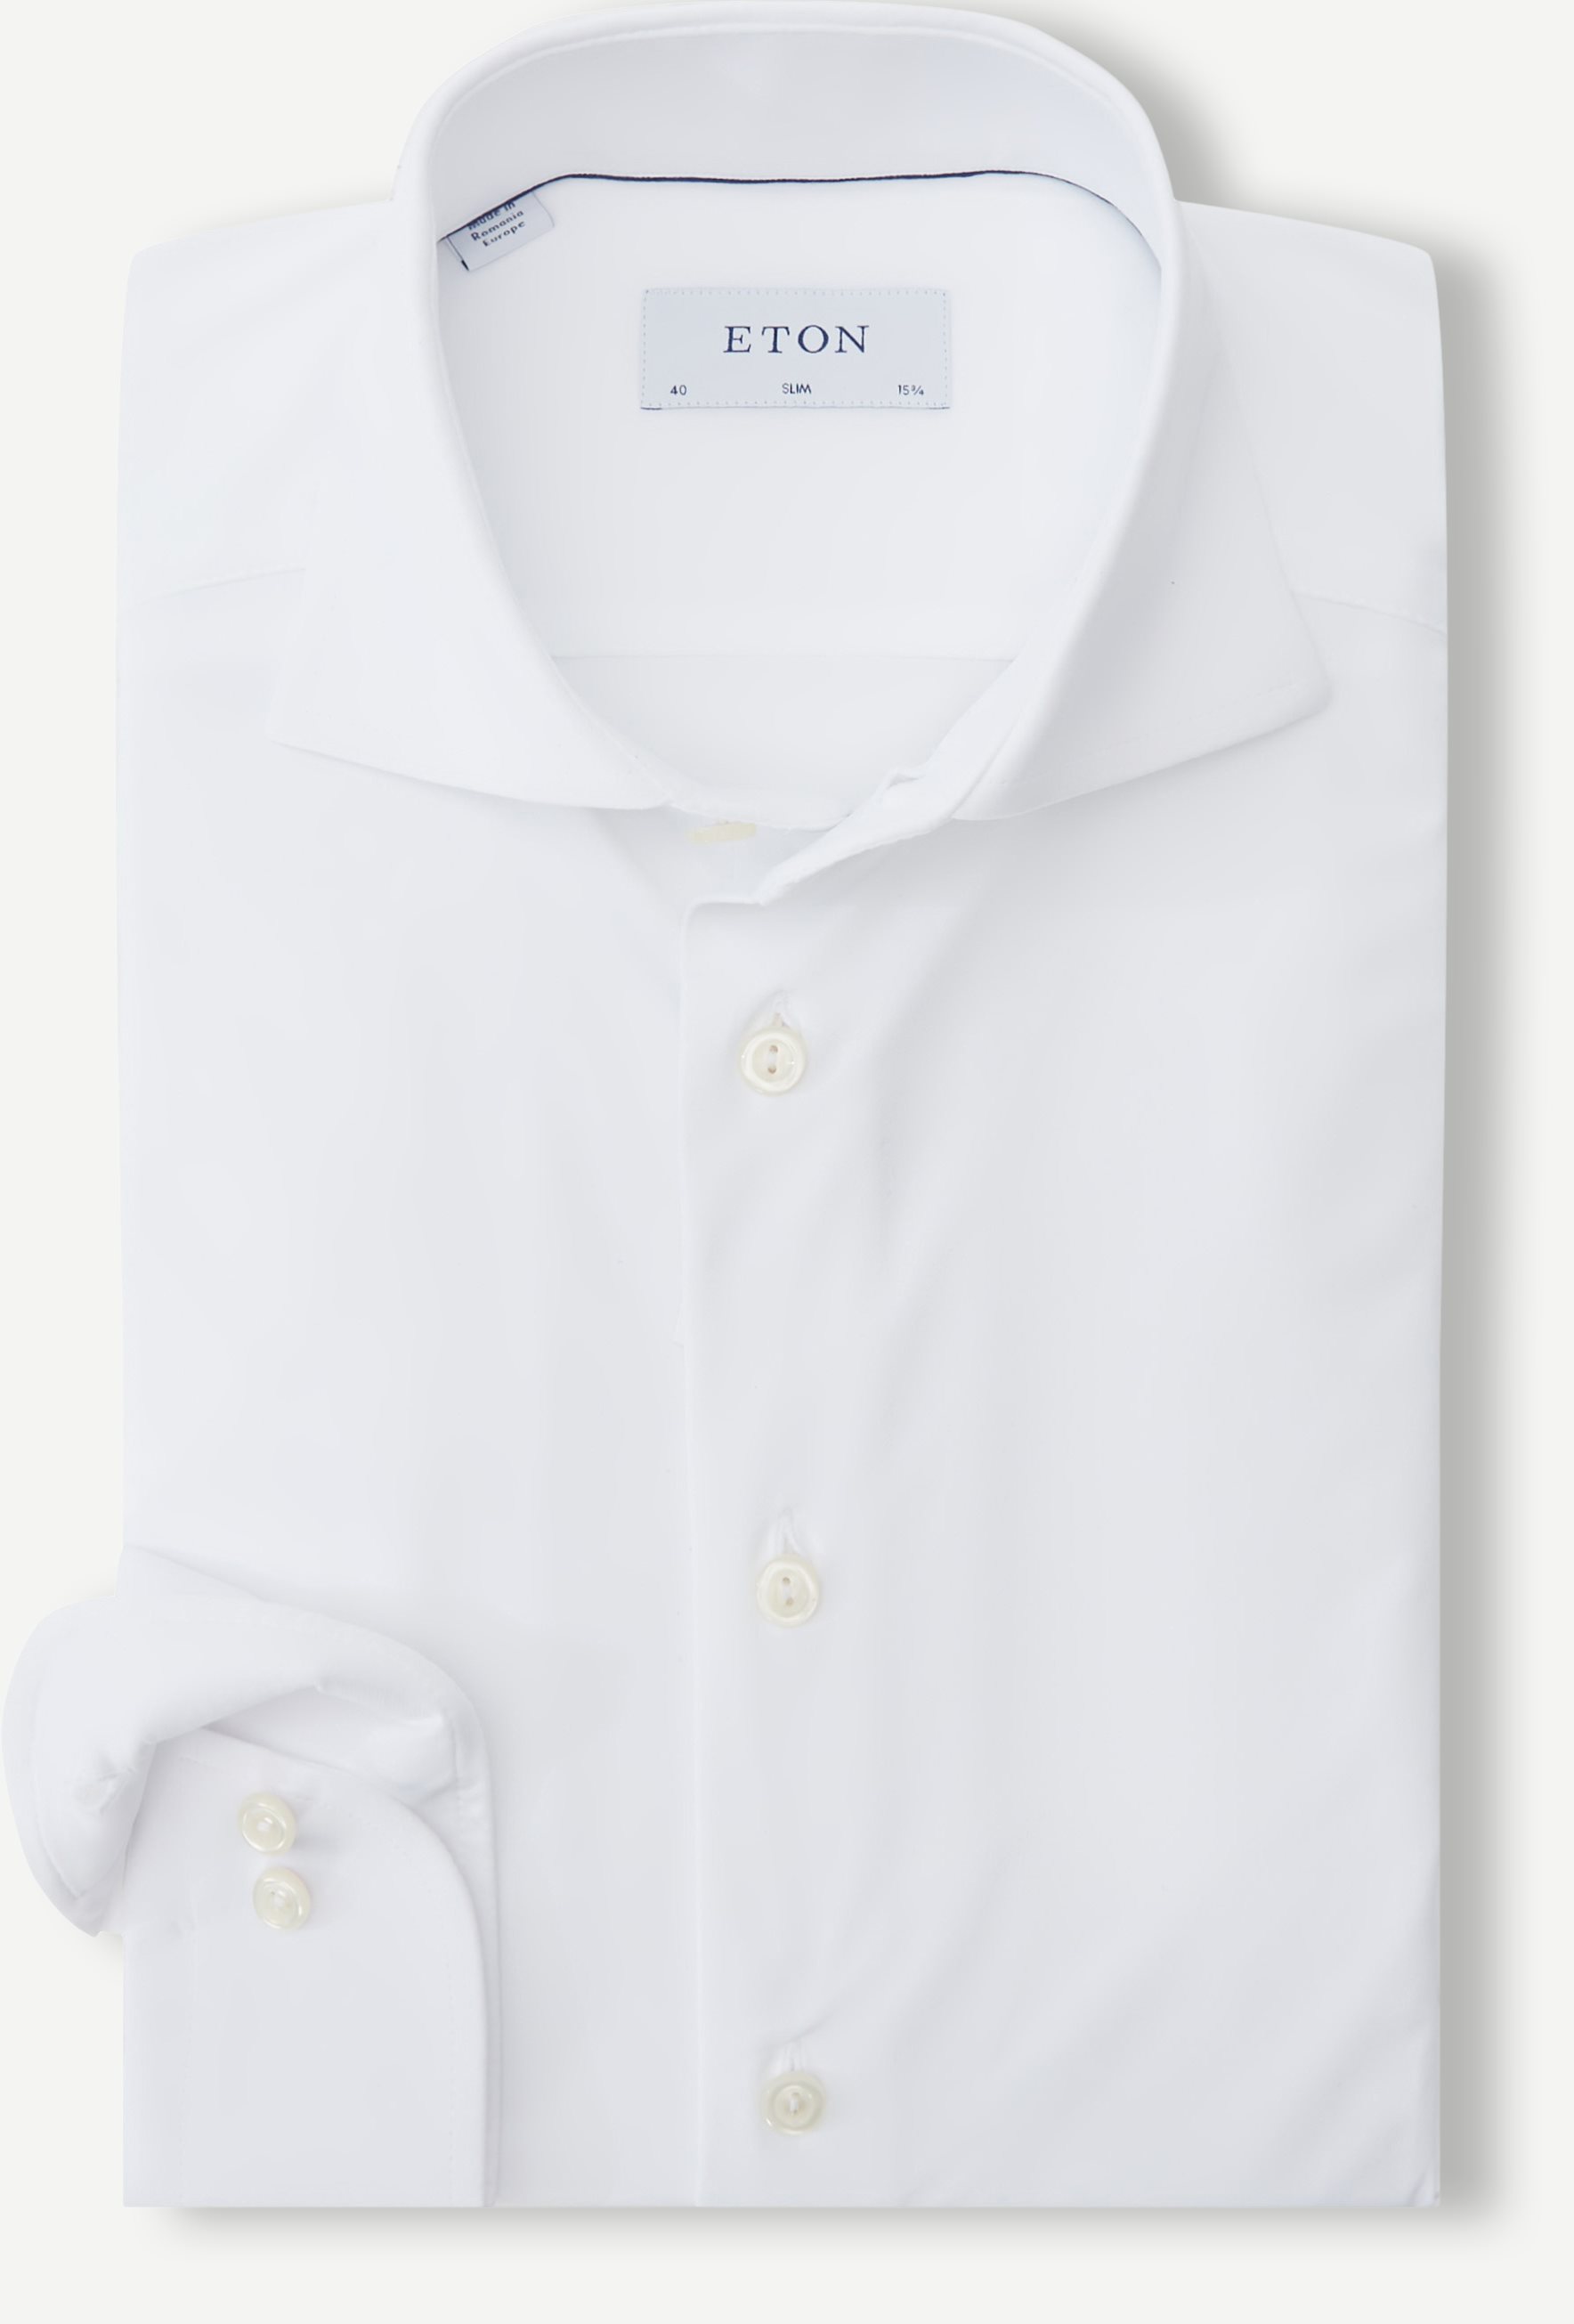 Eton Shirts 8005 84 White